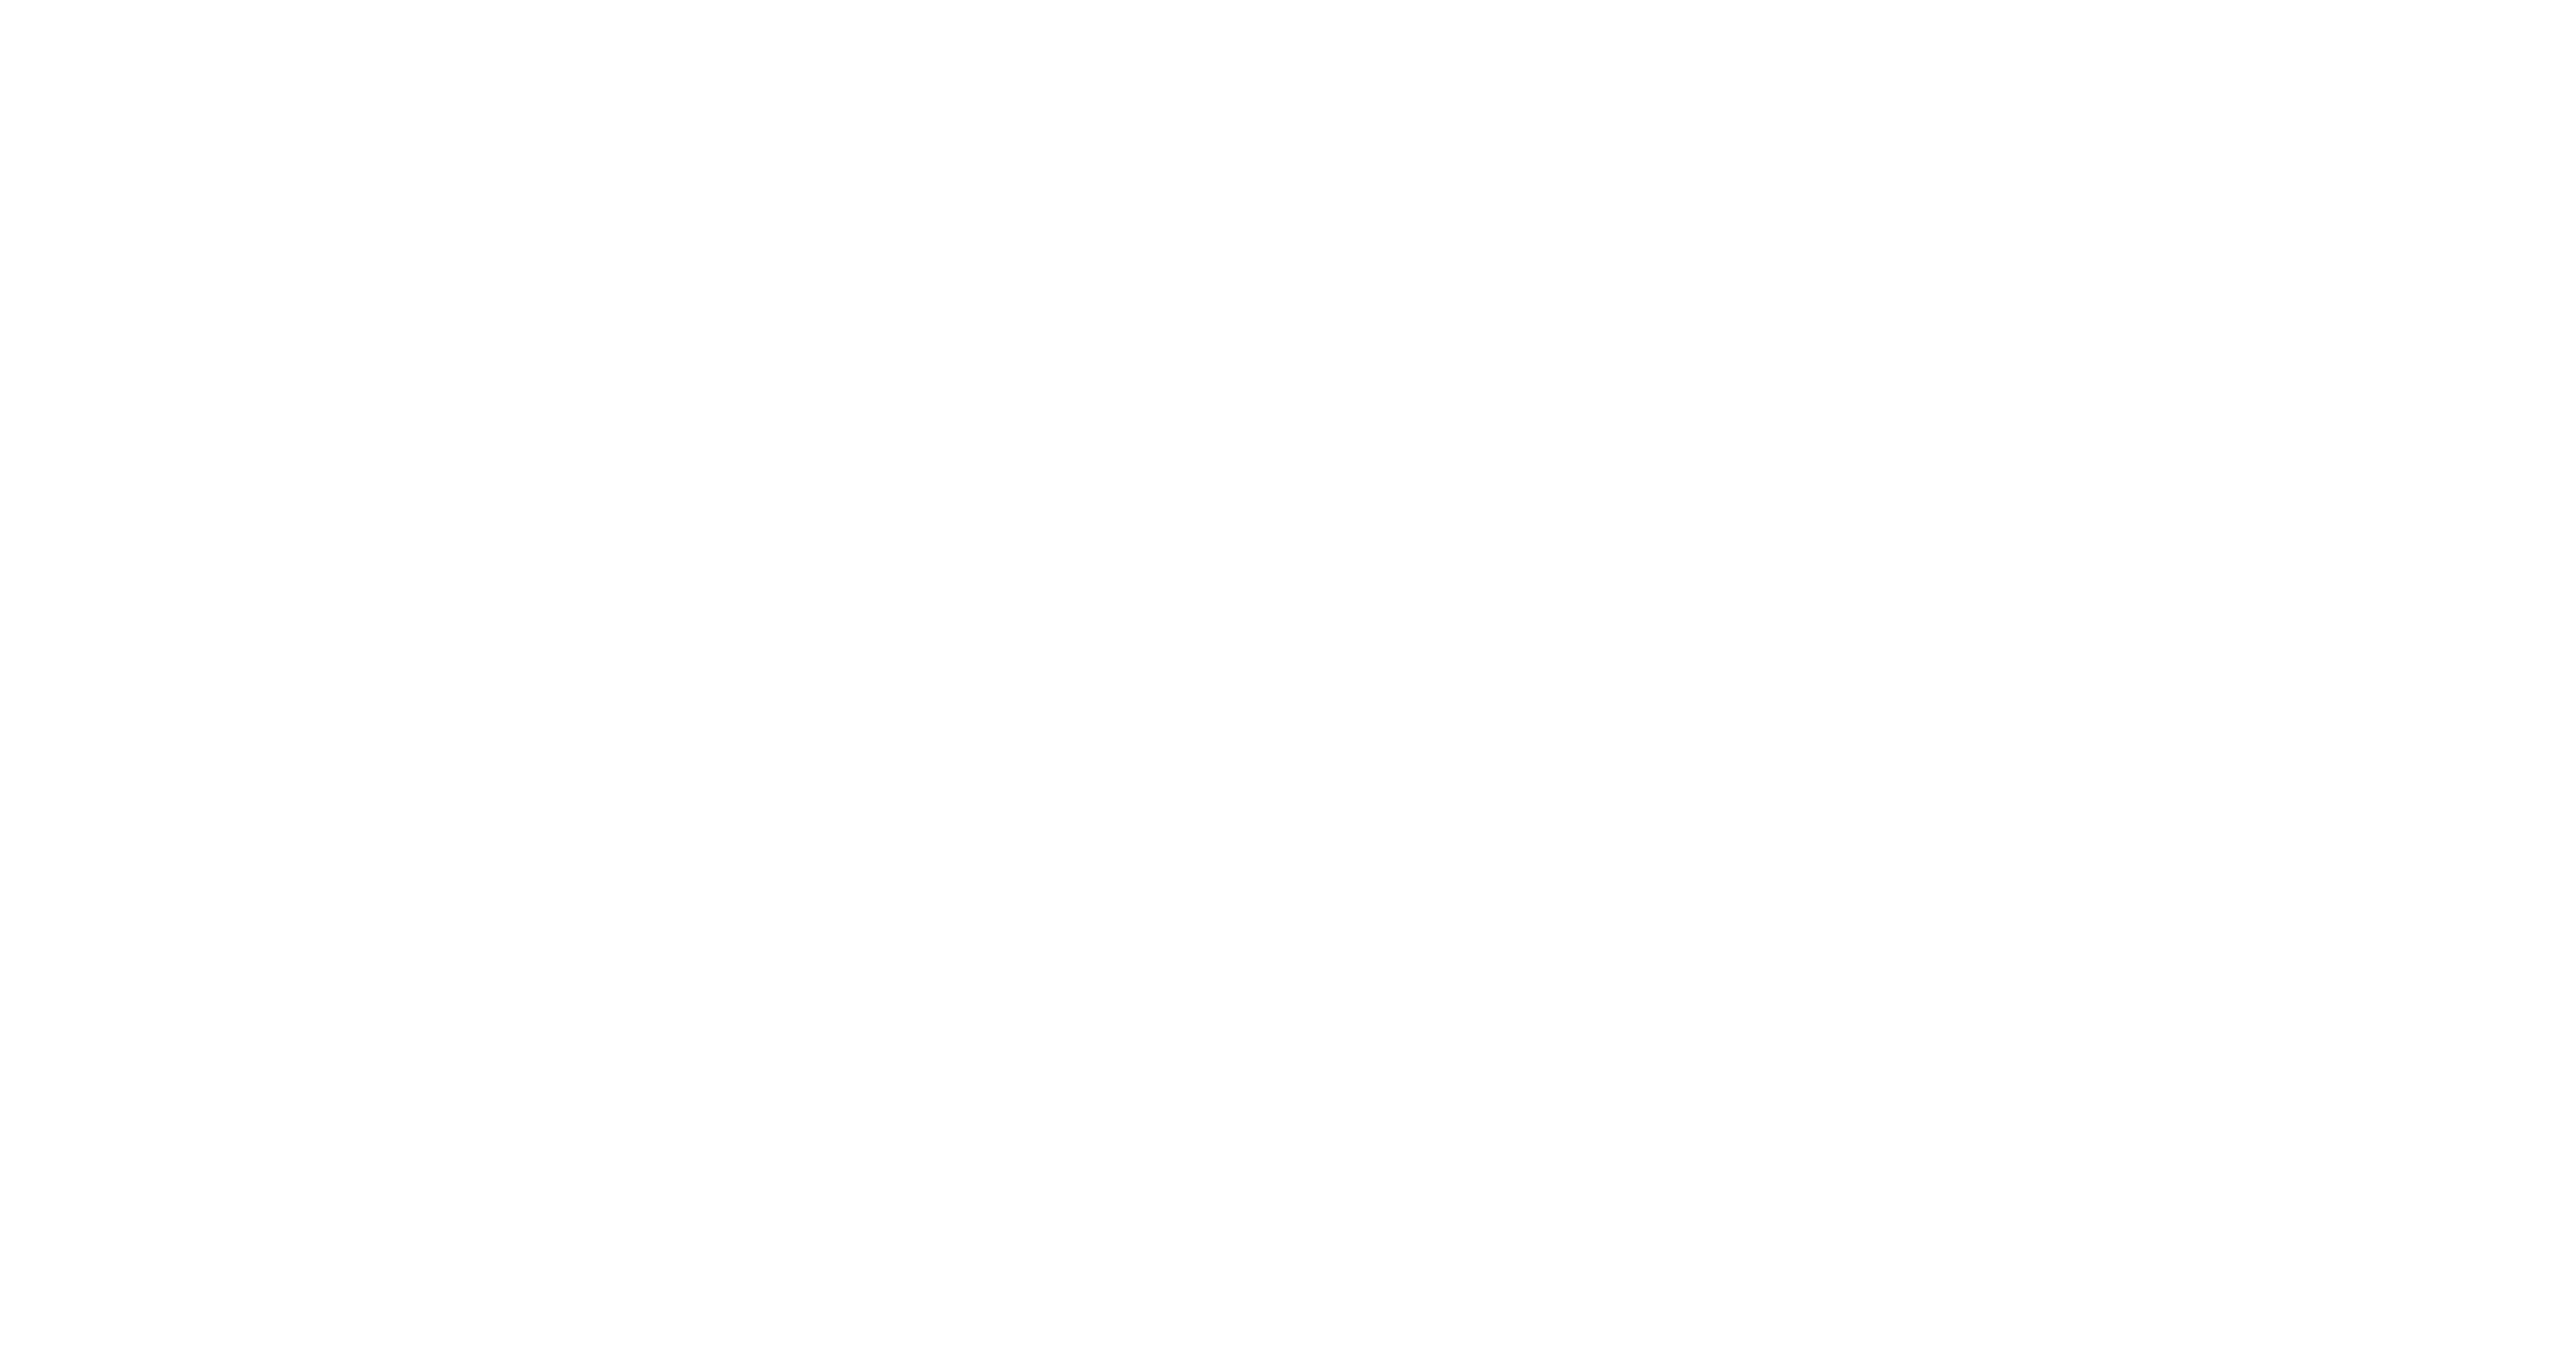 Darwish Hand Carwash